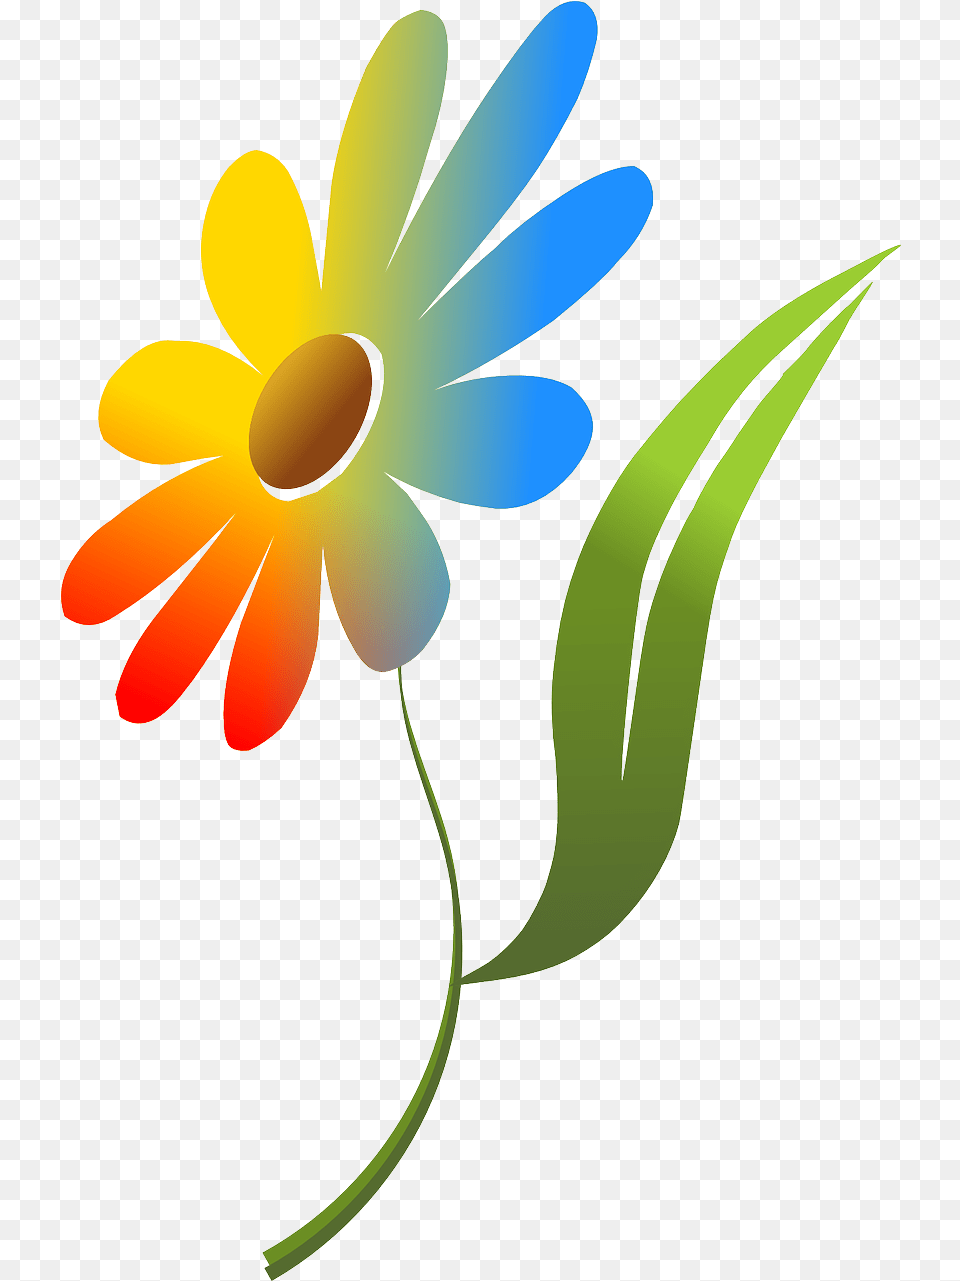 Download Photo Of Flowernaturecolorfulredblue Colorful Flower Image, Daisy, Petal, Plant, Animal Free Transparent Png